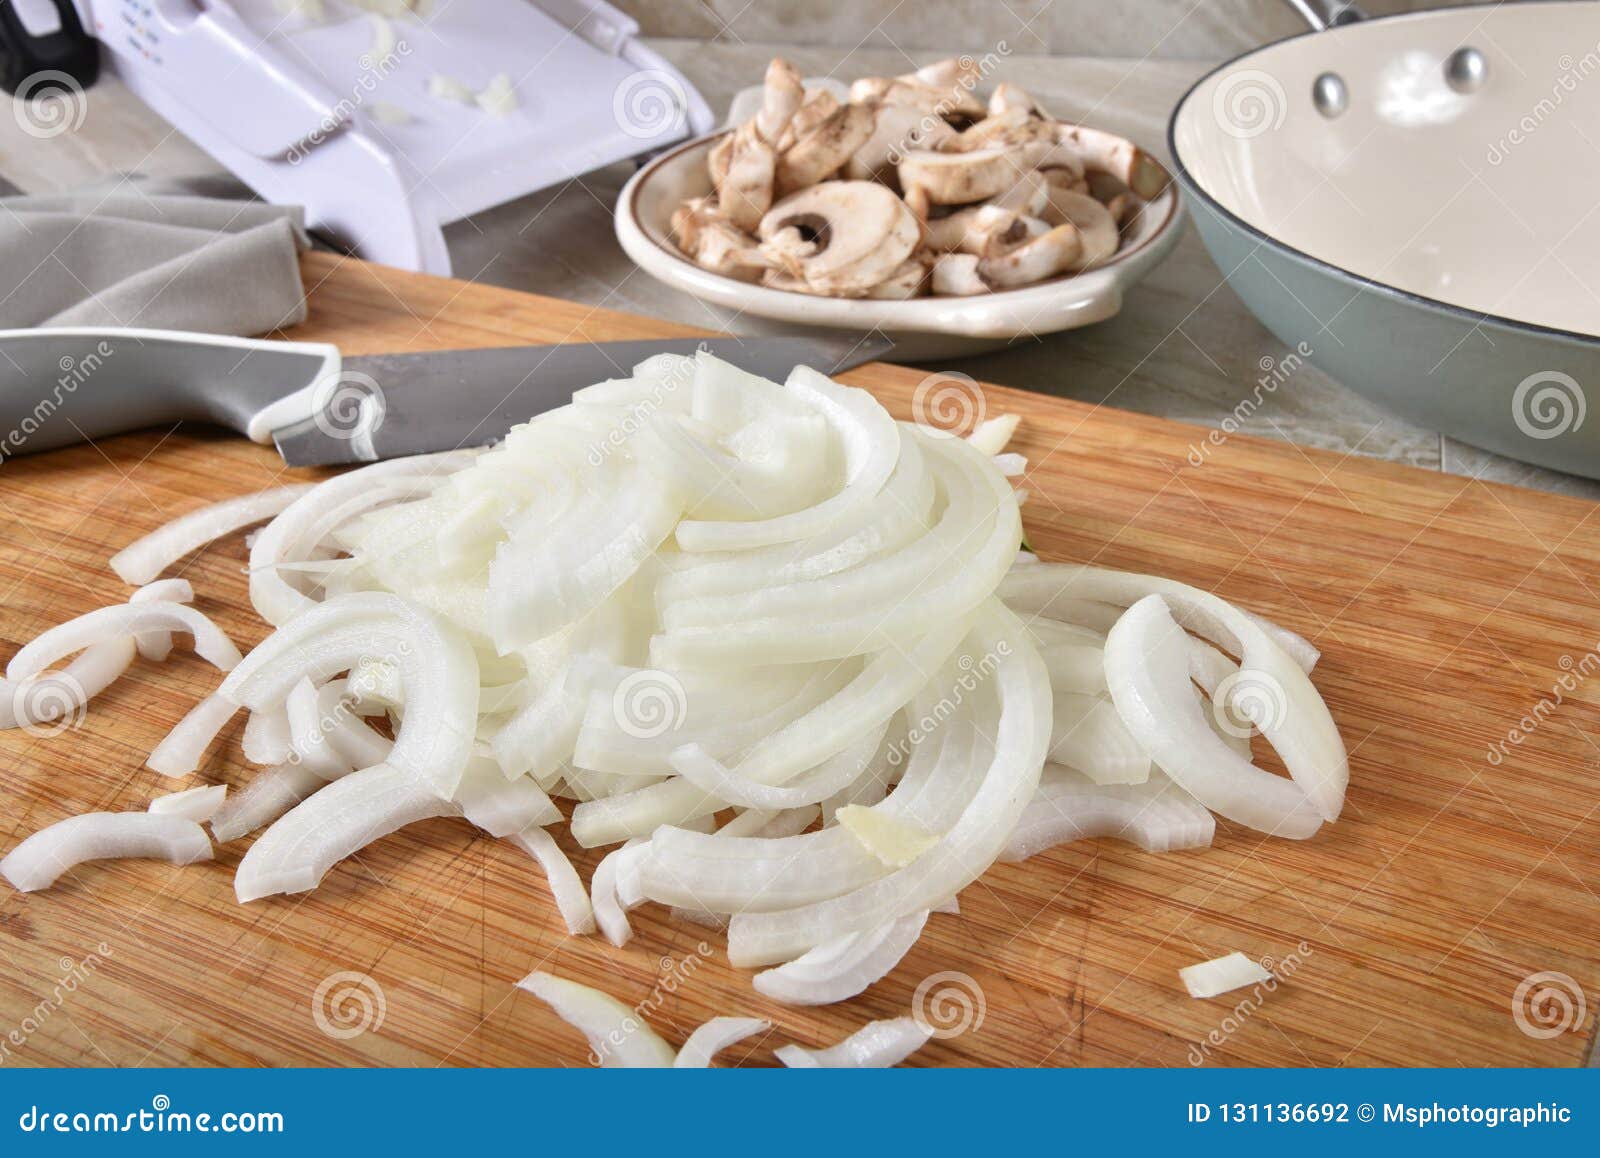 https://thumbs.dreamstime.com/z/fresh-thin-sliced-onion-cutting-board-mushrooms-kithen-slicer-131136692.jpg